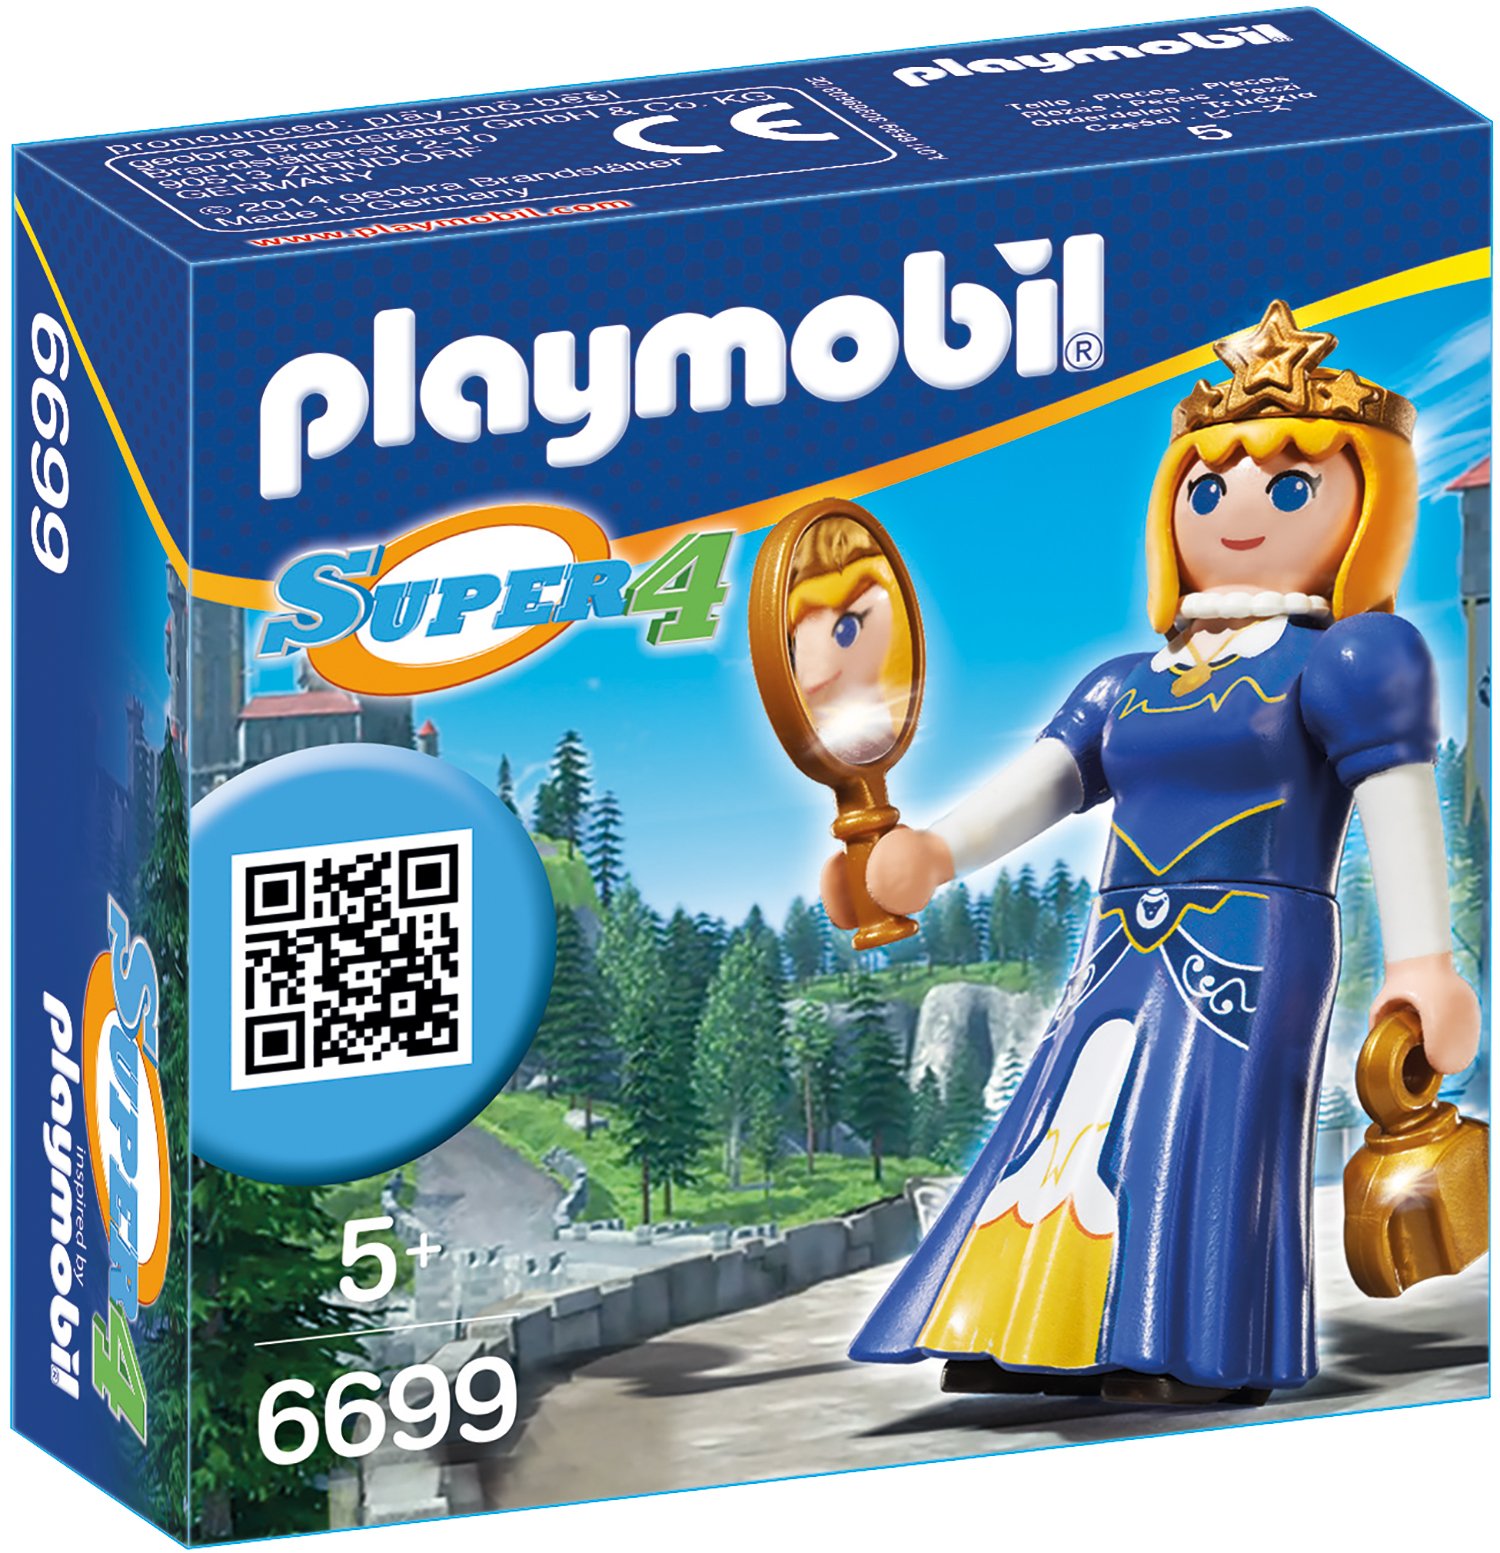 Playmobil Super Princess Leonora Play Set